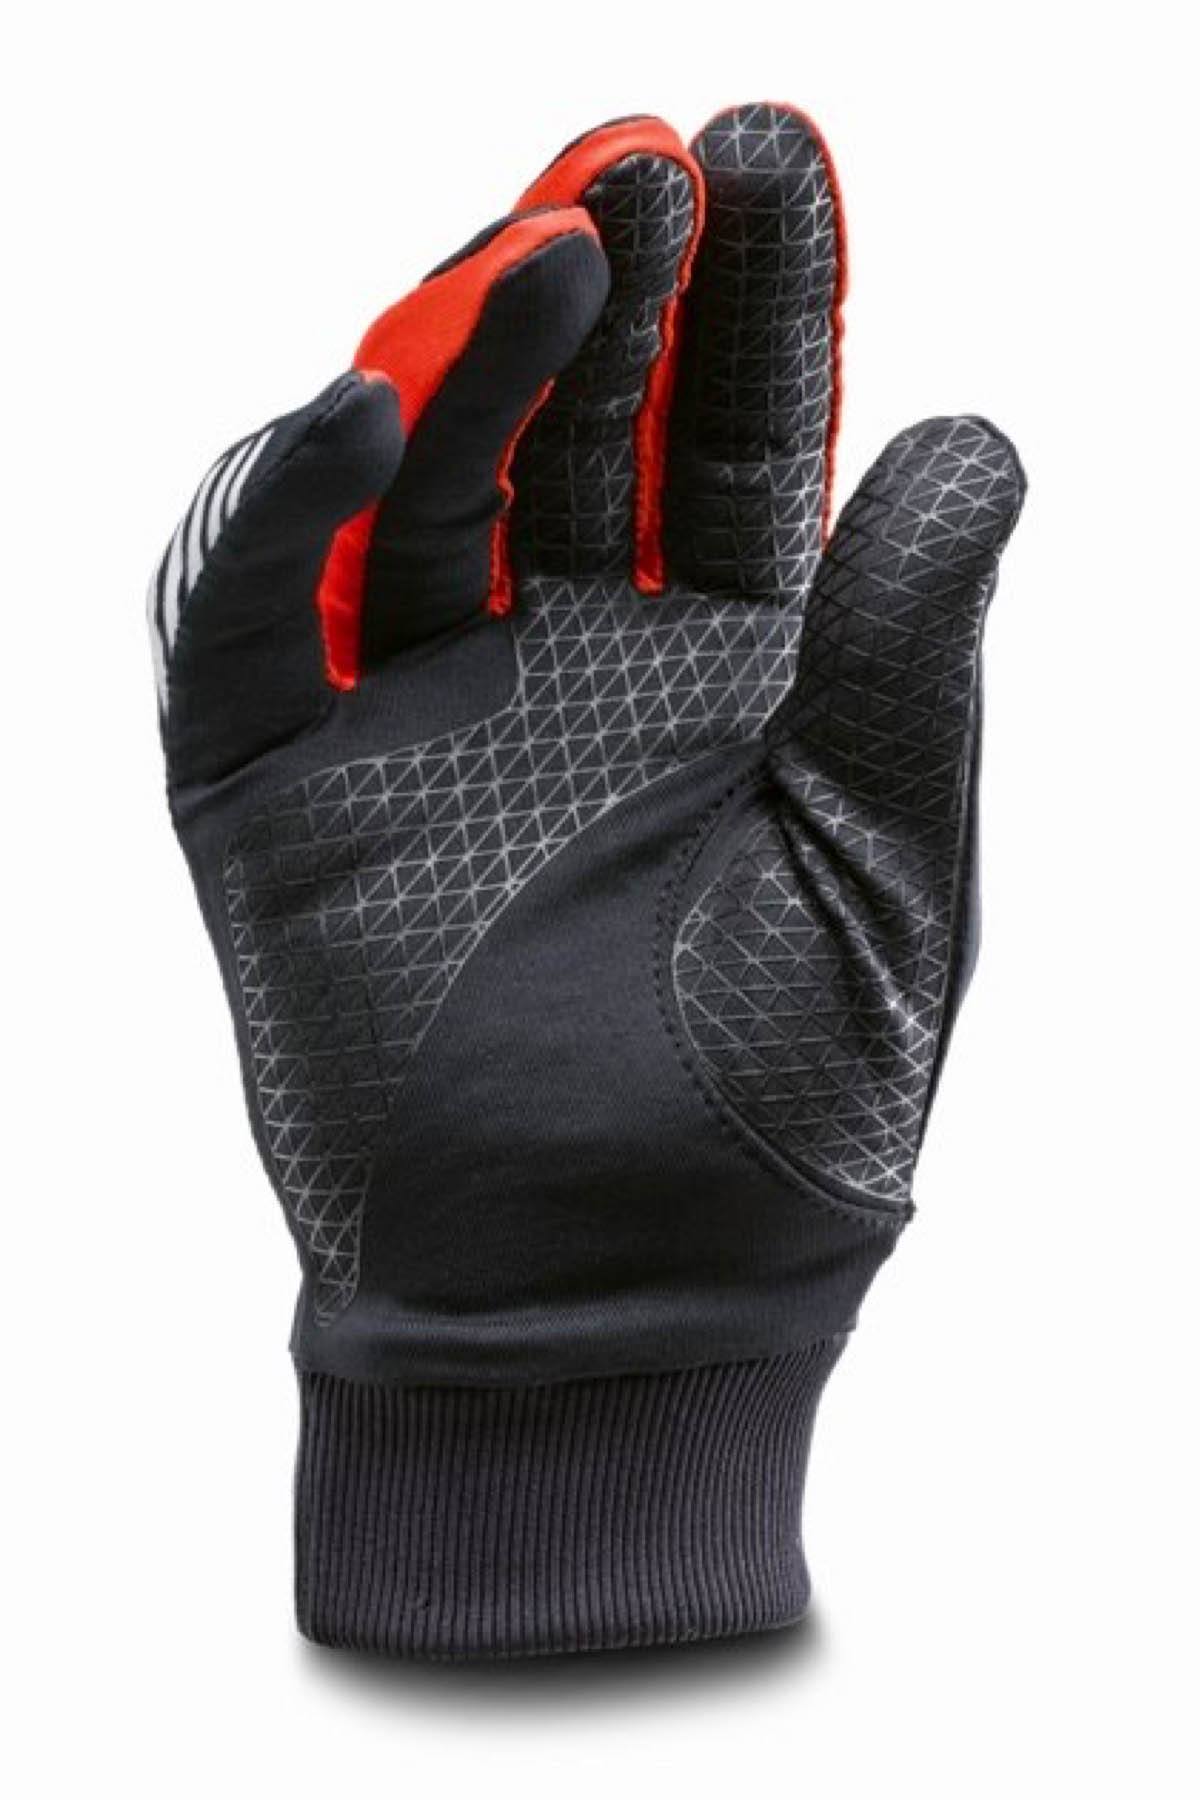 Under Armour Black/Orange ColdGear Infrared Engage Touchscreen Running Gloves